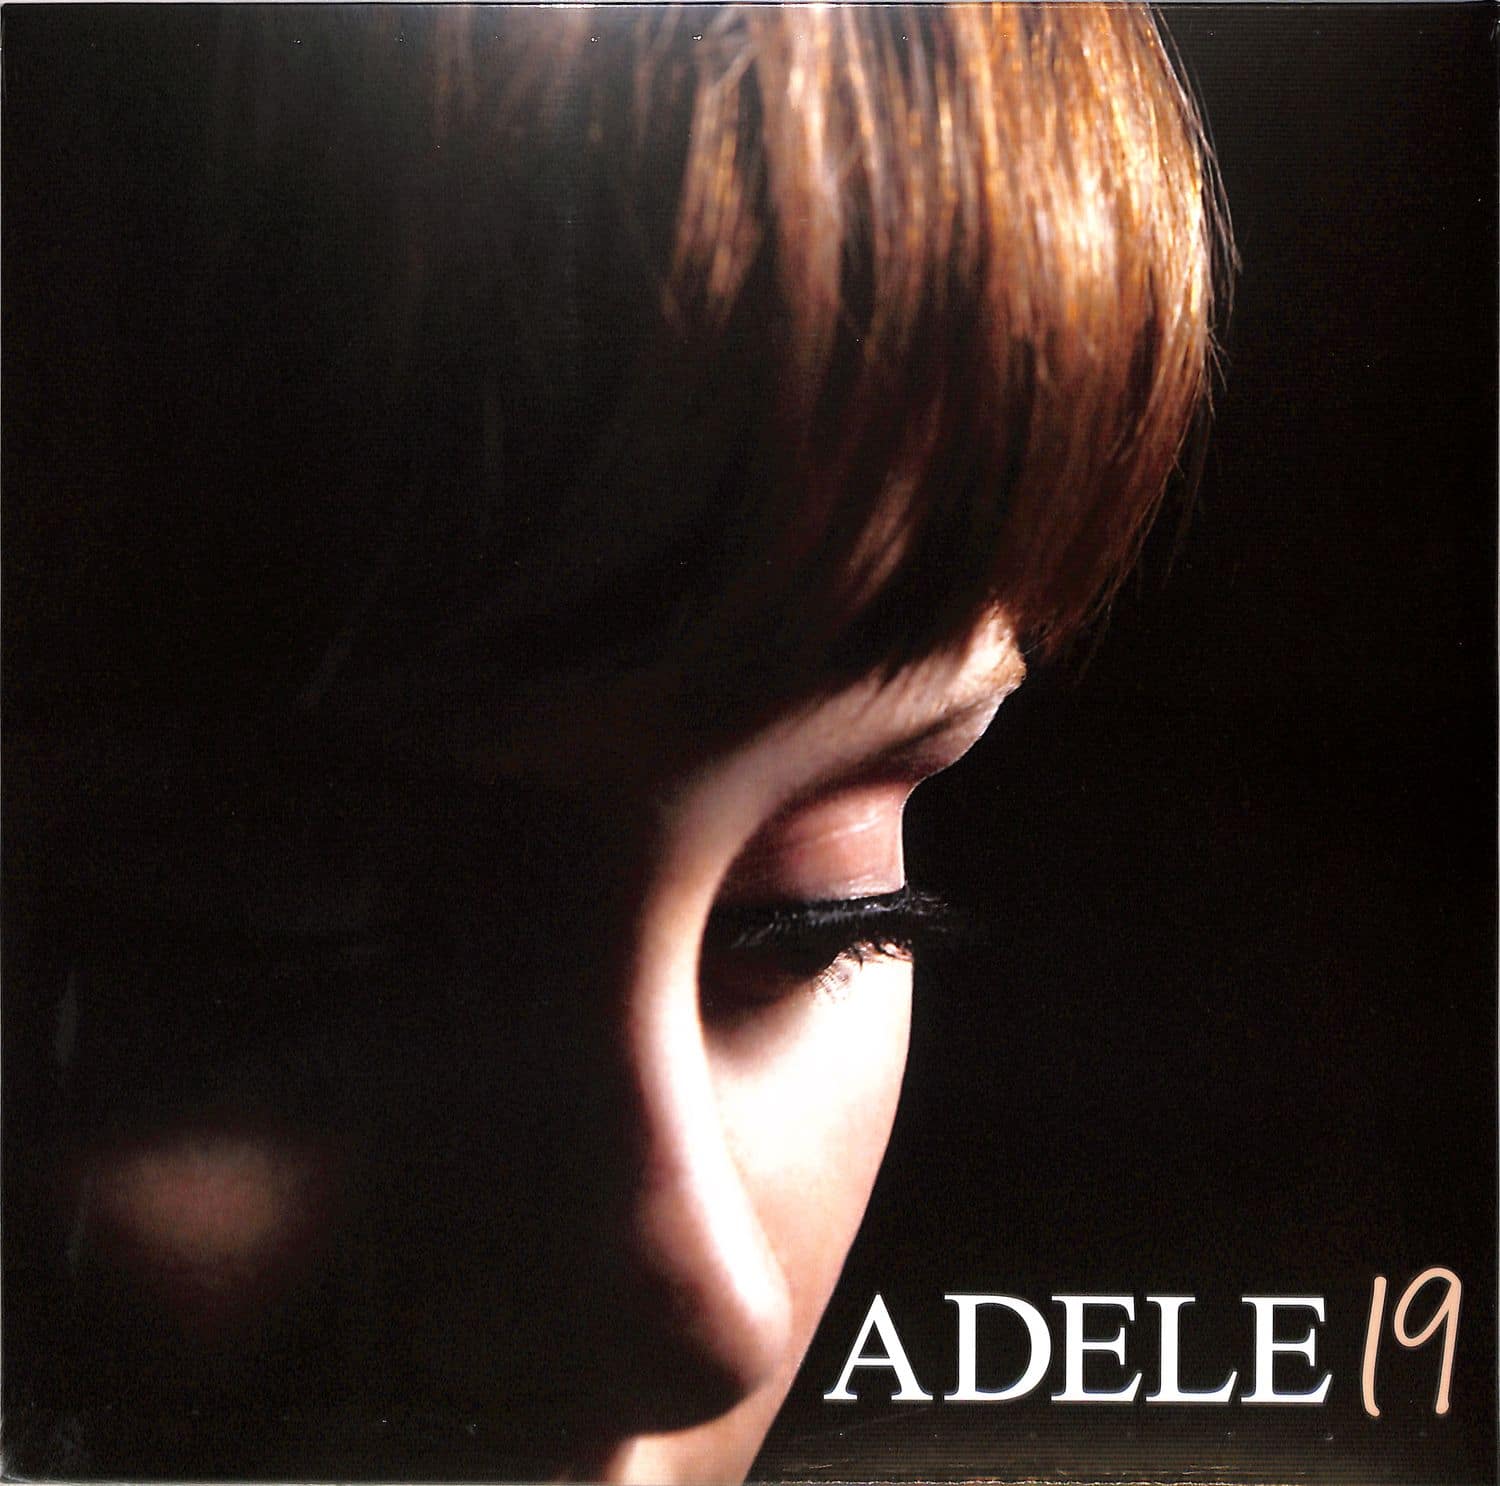 Adele - 19 